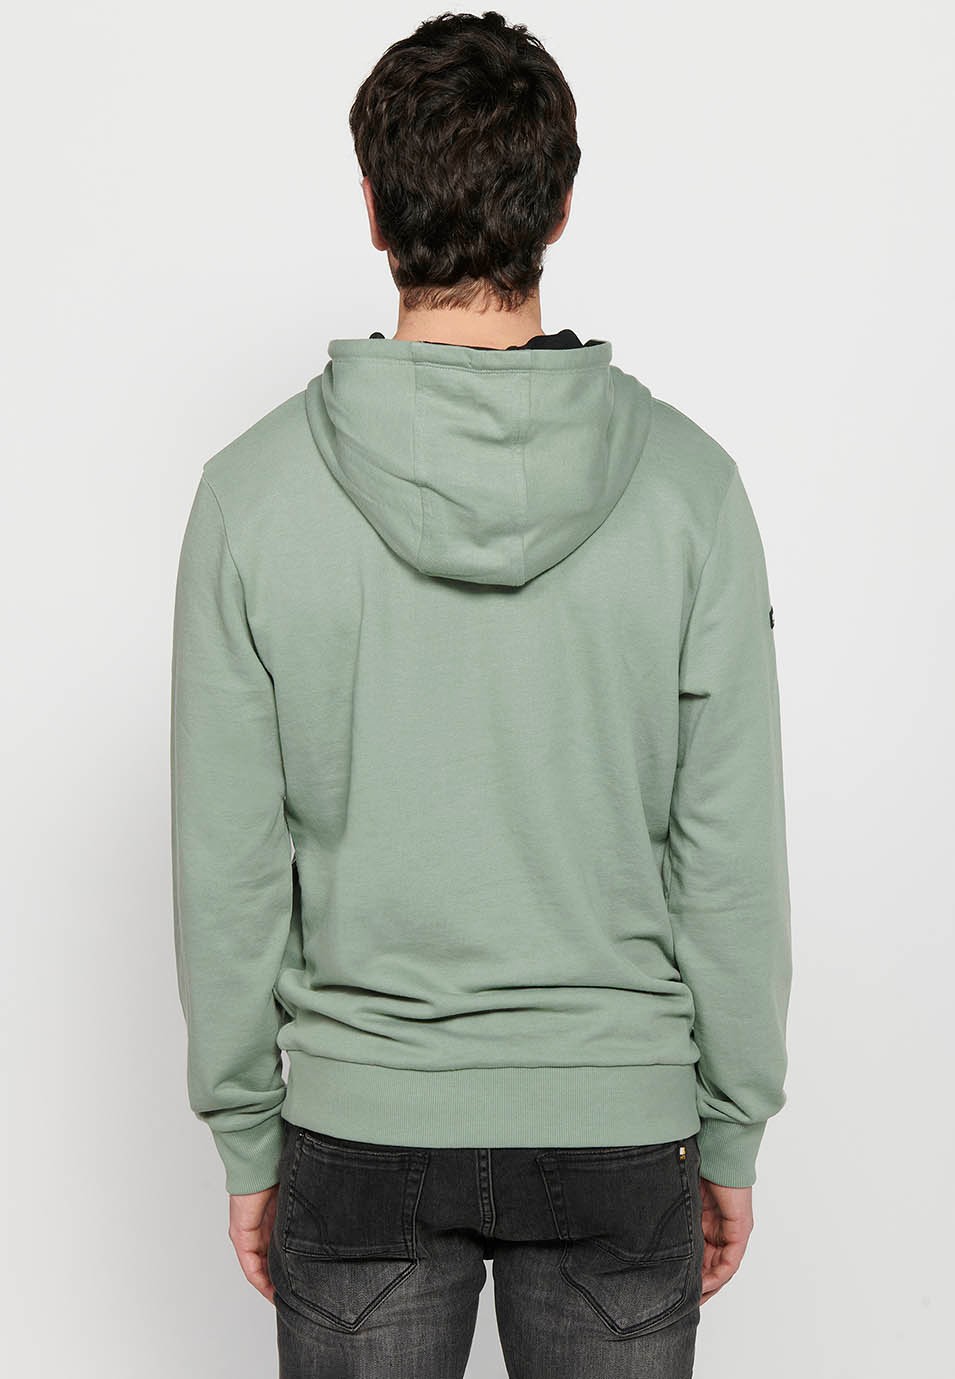 Men's Khaki Color Front Detail Drawstring Adjustable Hooded Cross Neck Long Sleeve Sweatshirt